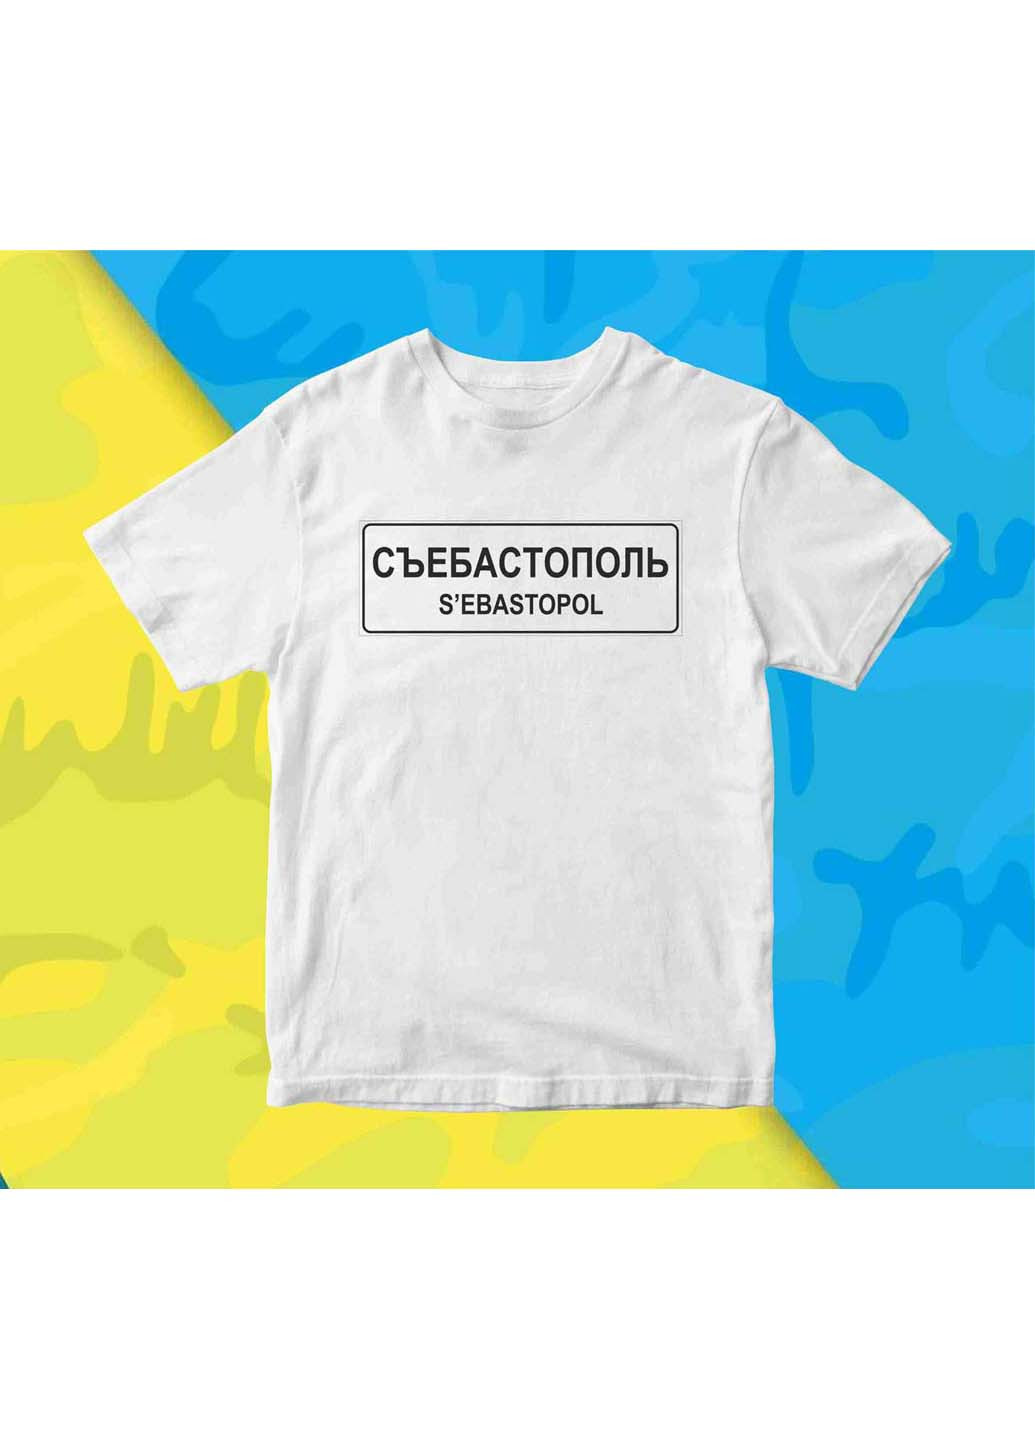 Біла футболка s'ebastopol с'єбастополь push it Кавун